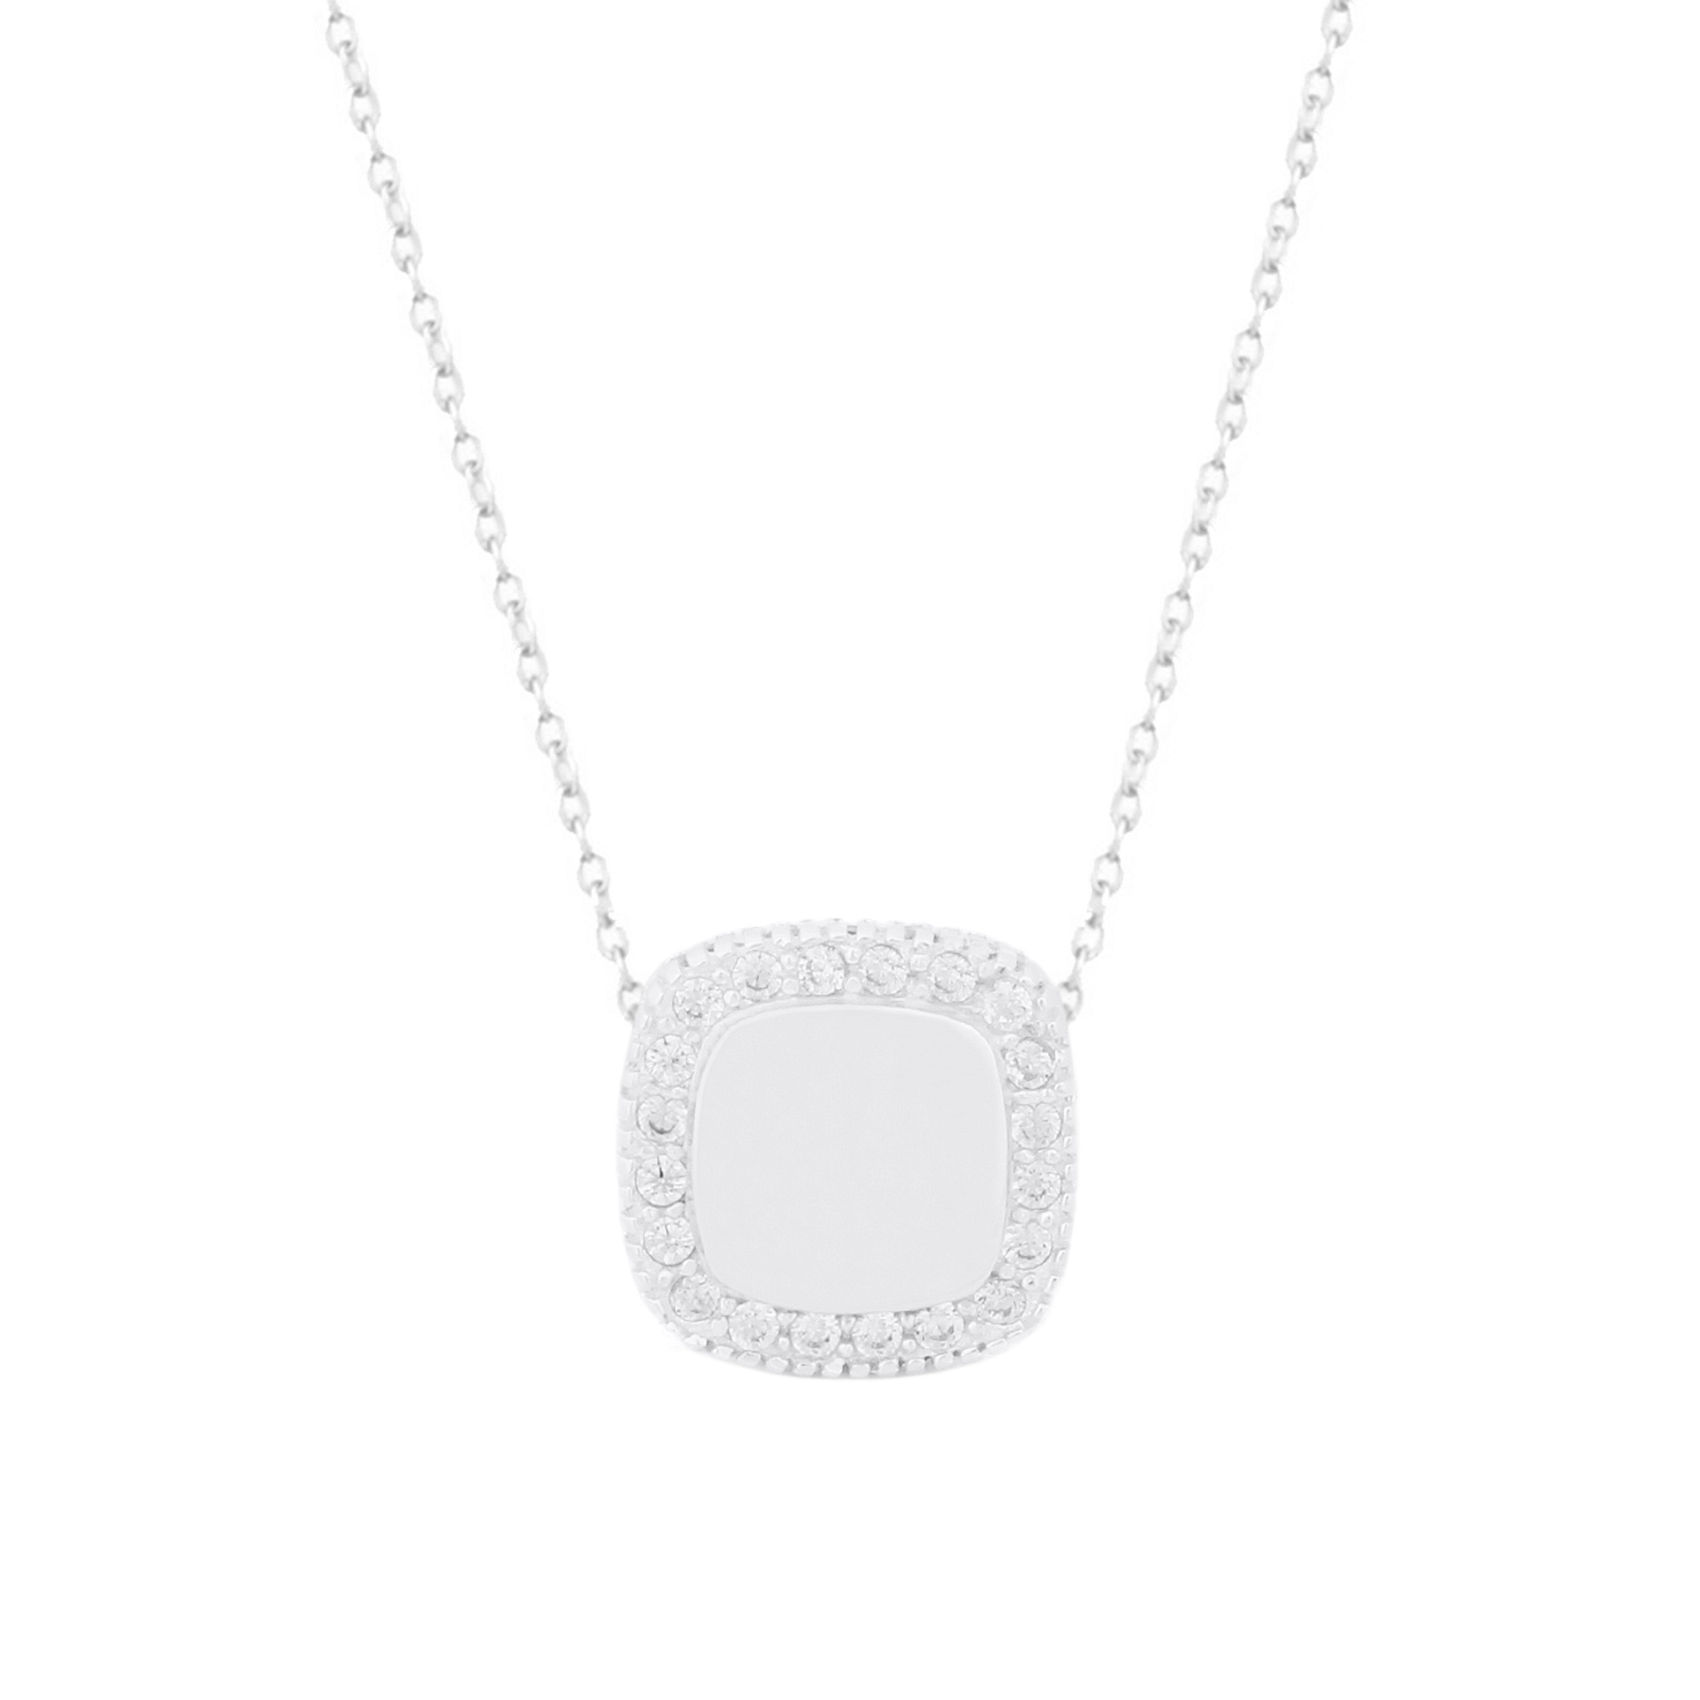 Dainty stylish jewelry with monogram and halo of rhinestones